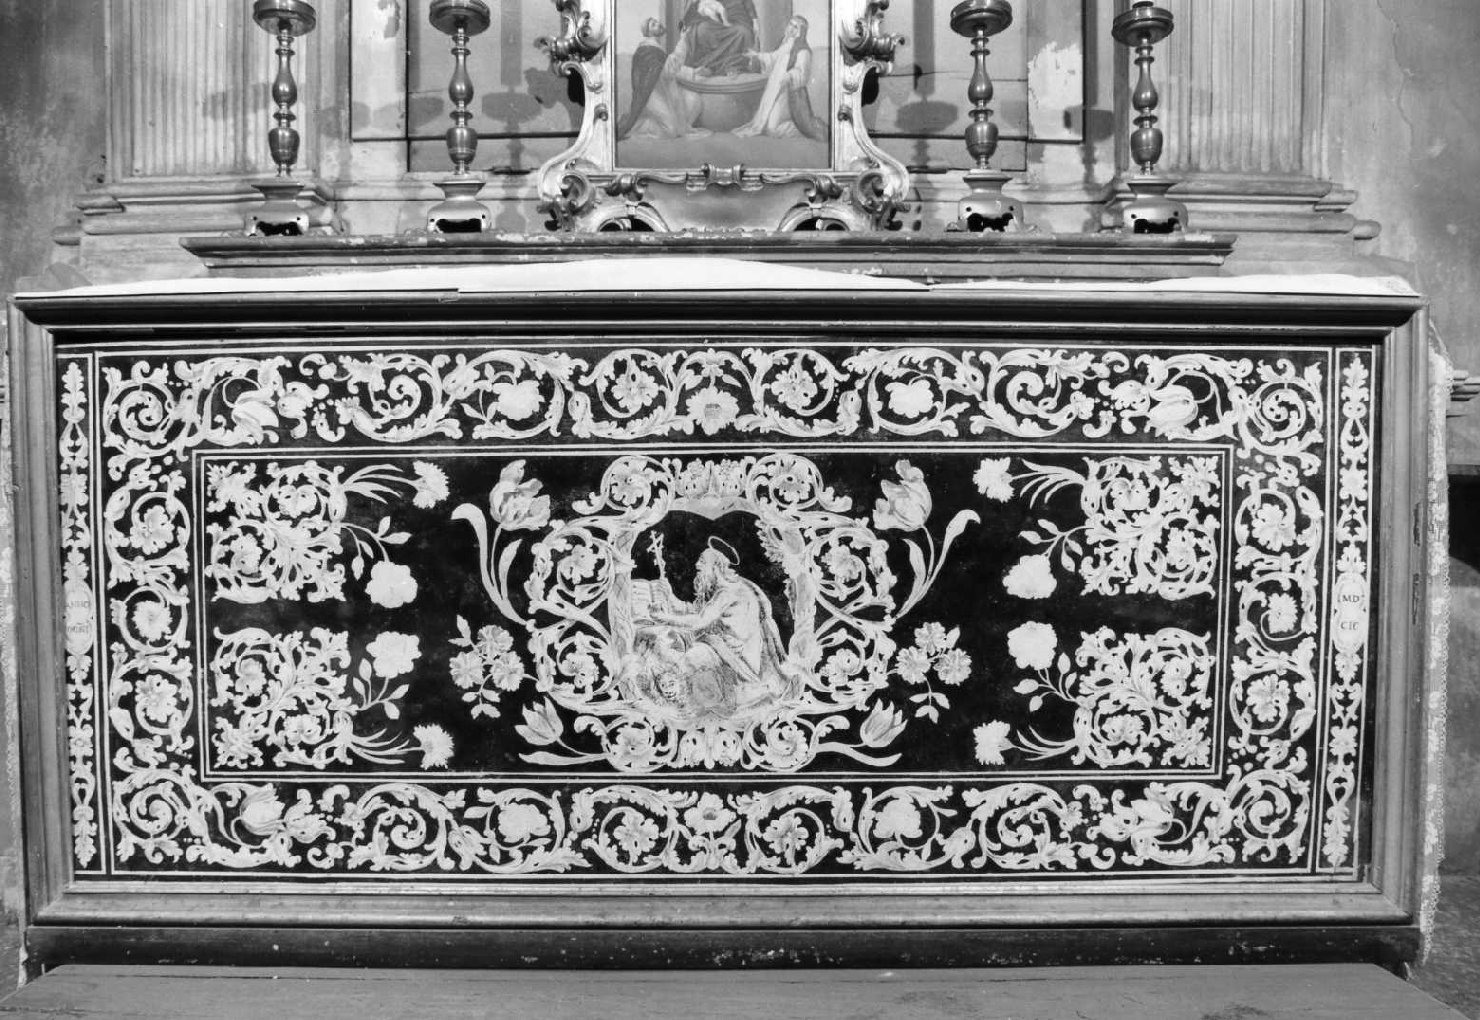 motivi decorativi vegetali; San Girolamo (paliotto) - ambito bolognese (sec. XVII)